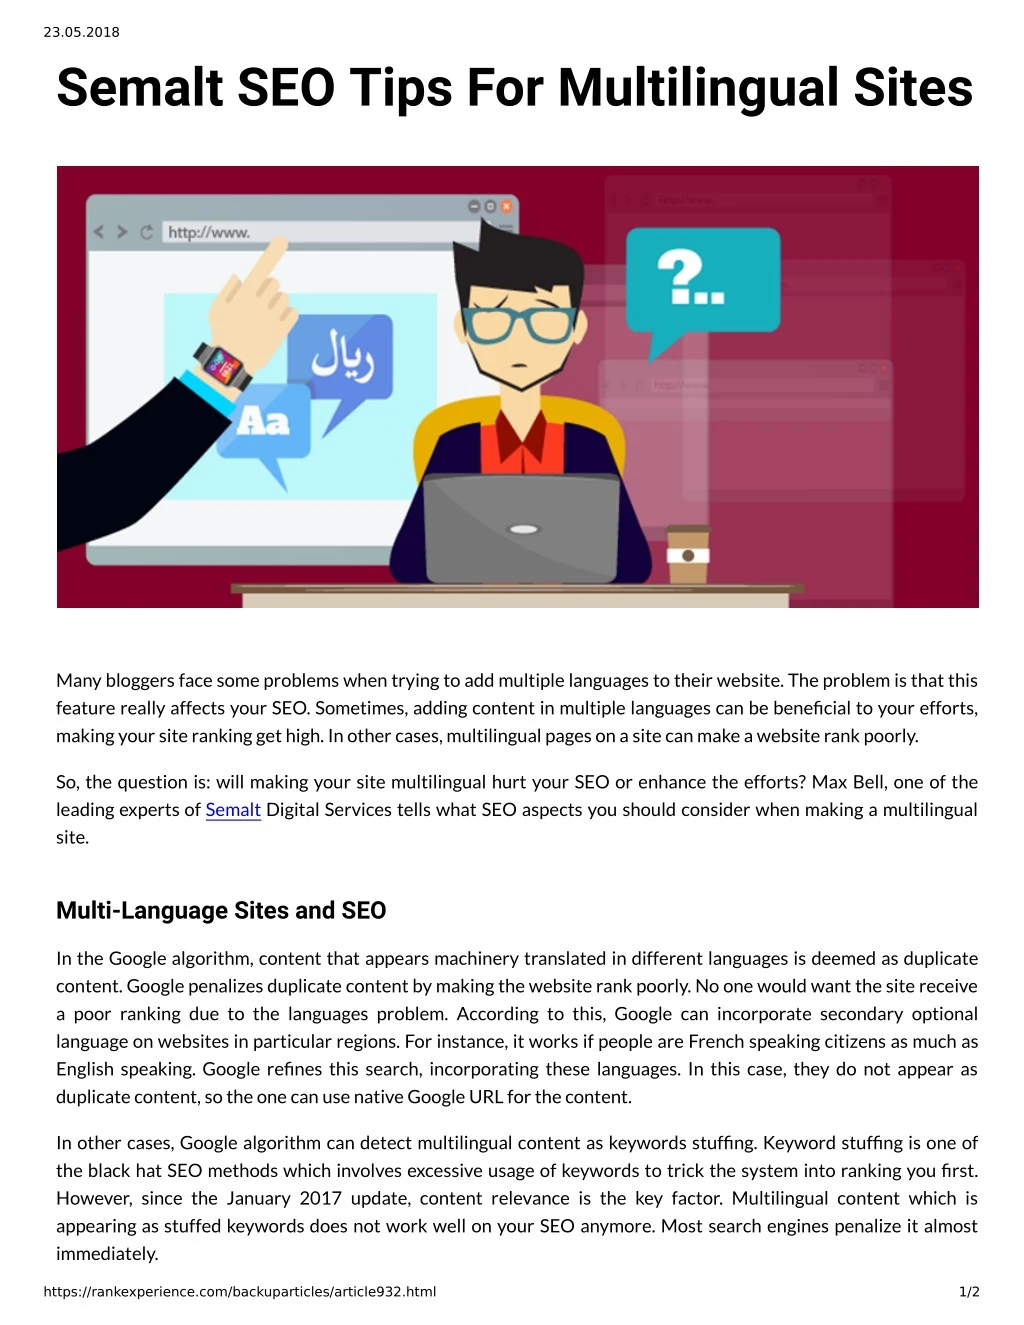 23 05 2018 semalt seo tips for multilingual sites